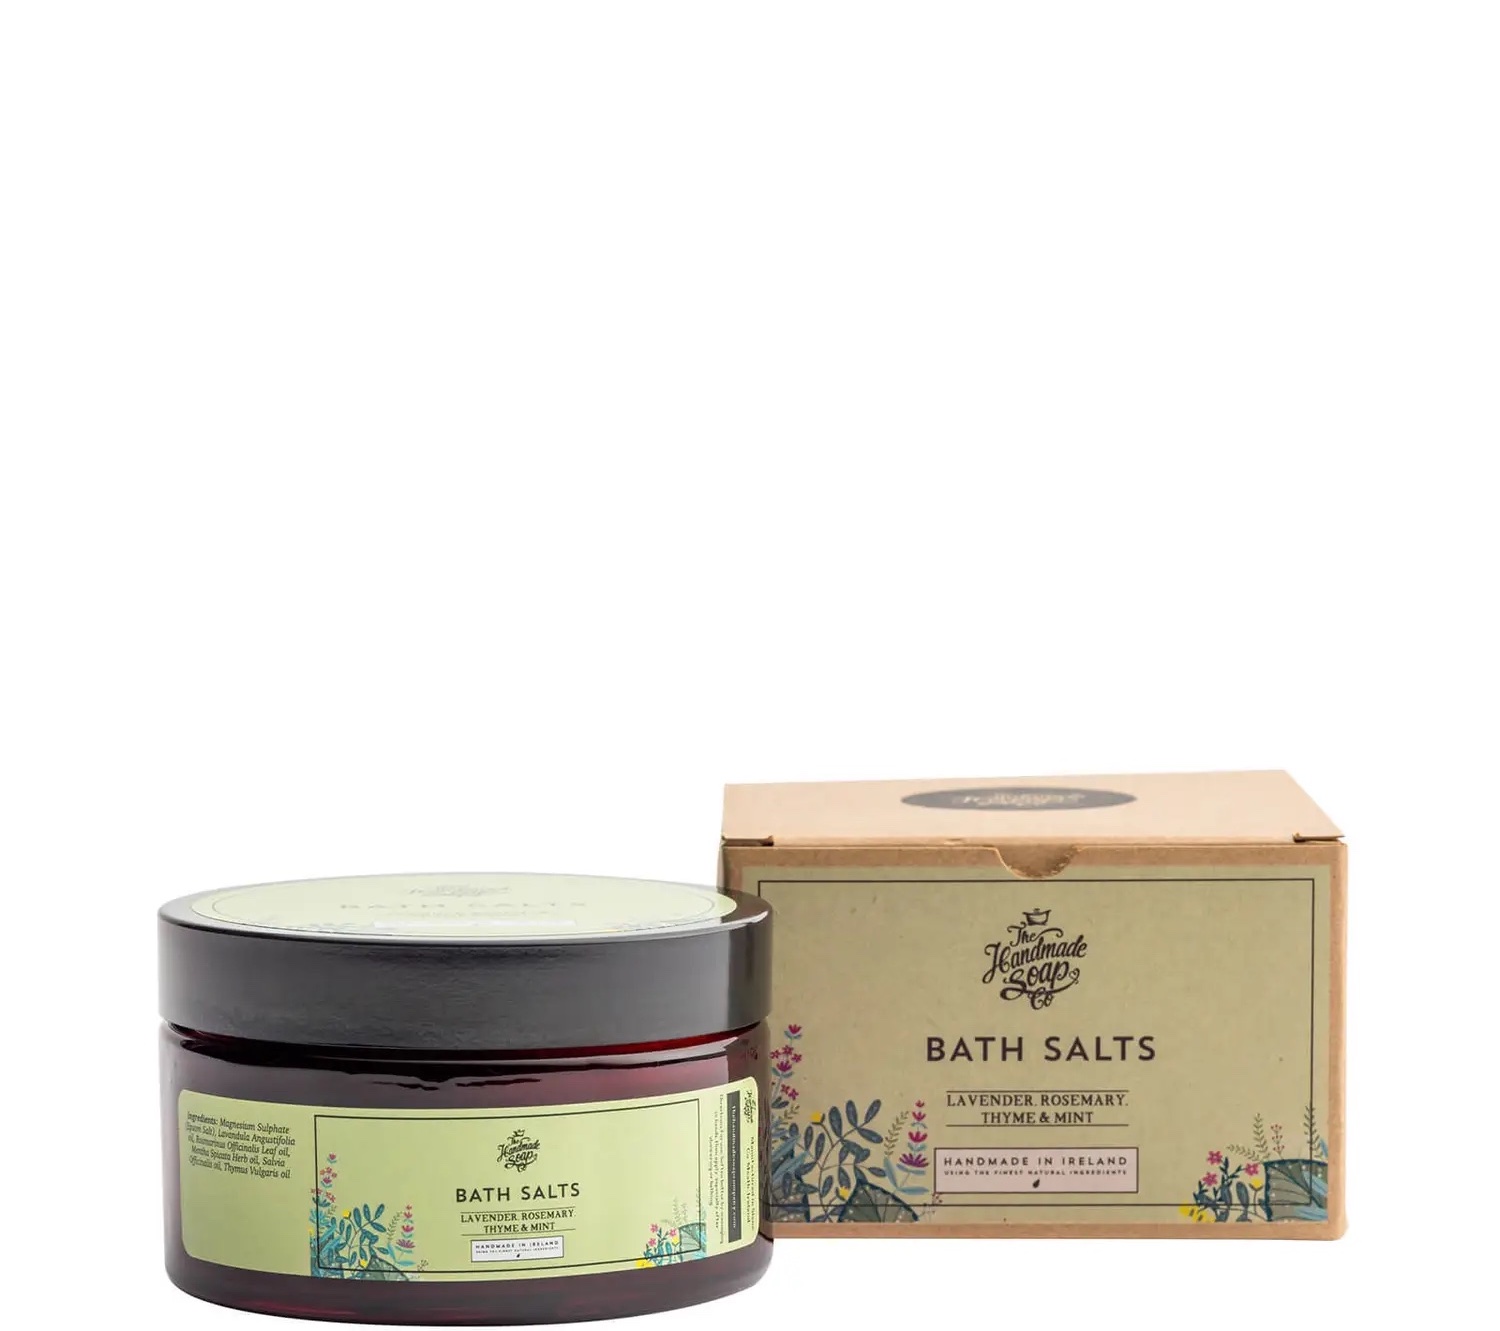 The Handmade Soap Co. Bath Salts